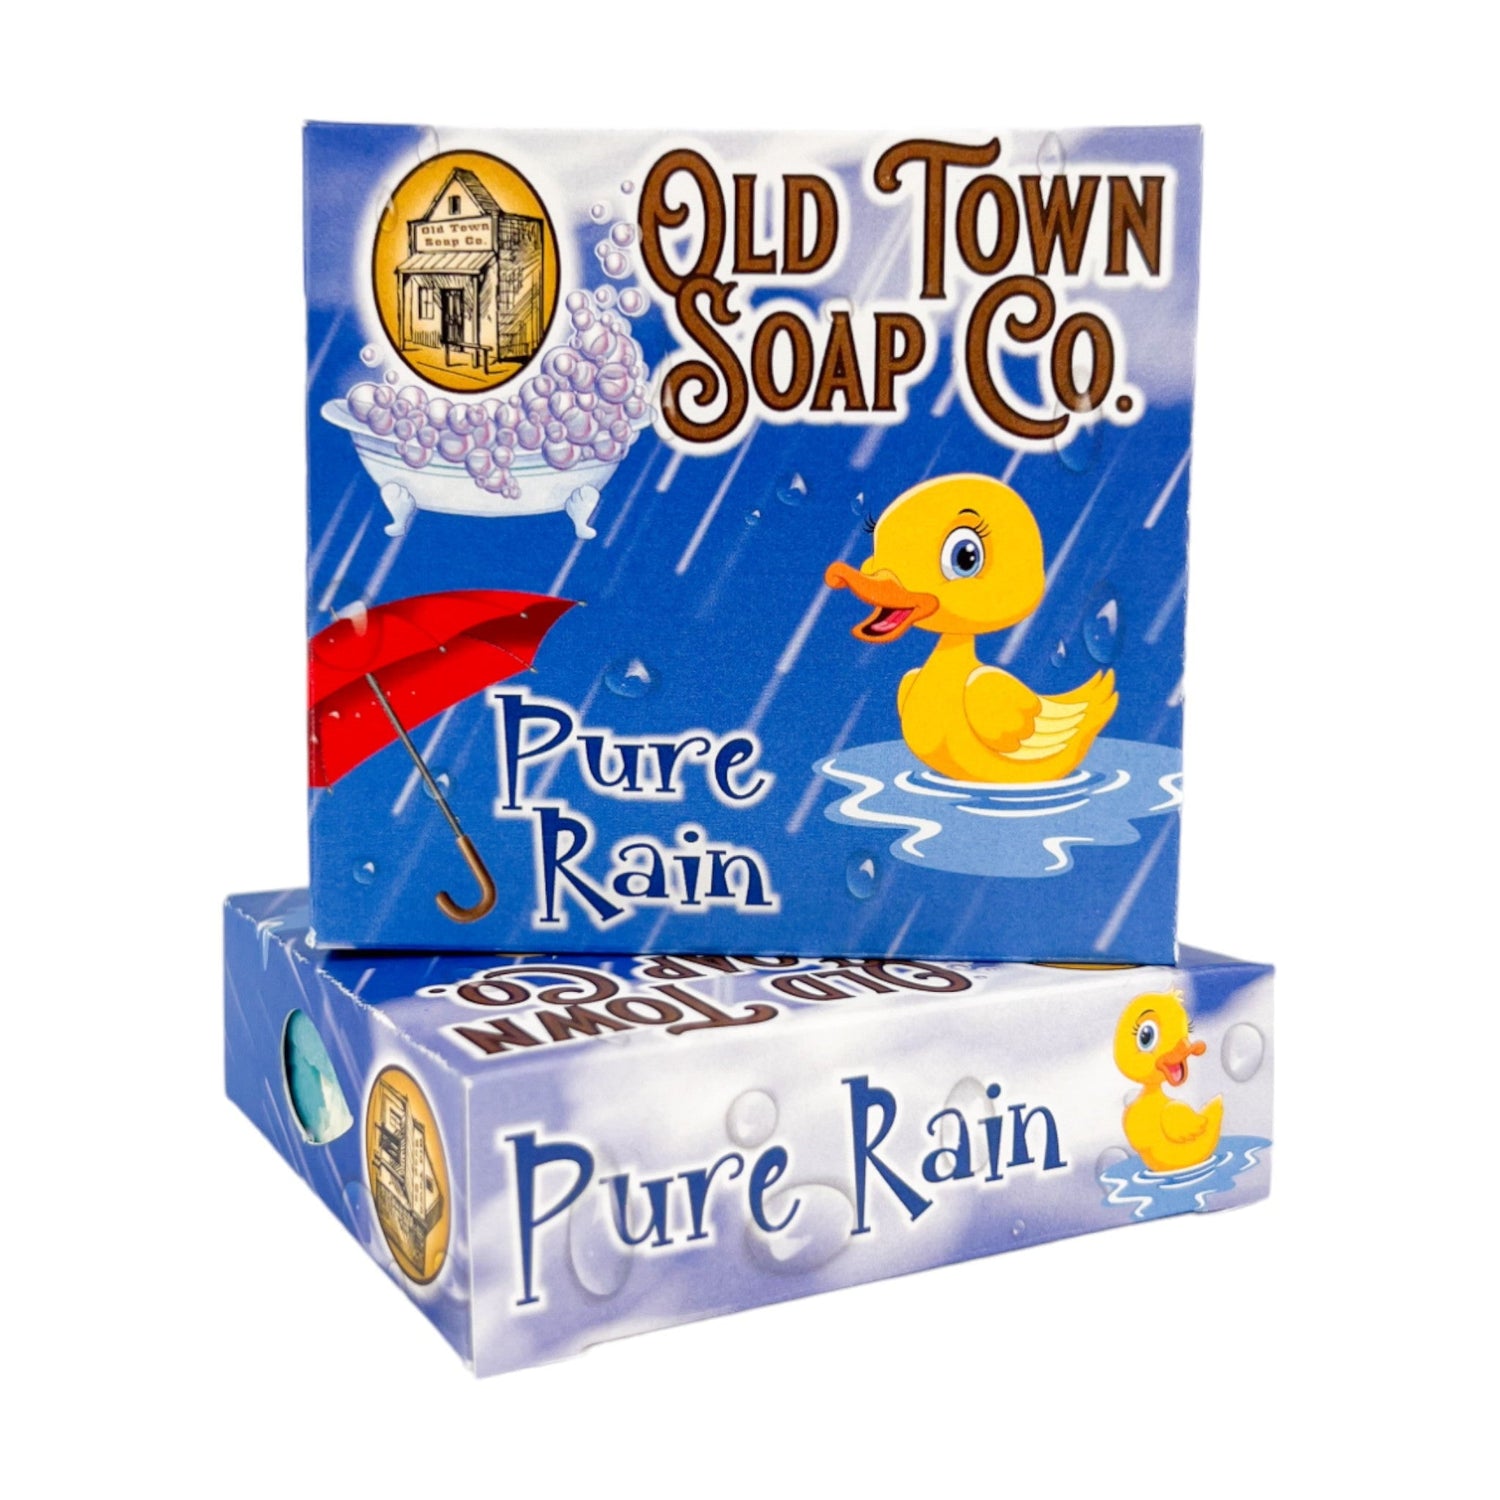 Pure Rain -Bar Soap - Old Town Soap Co.